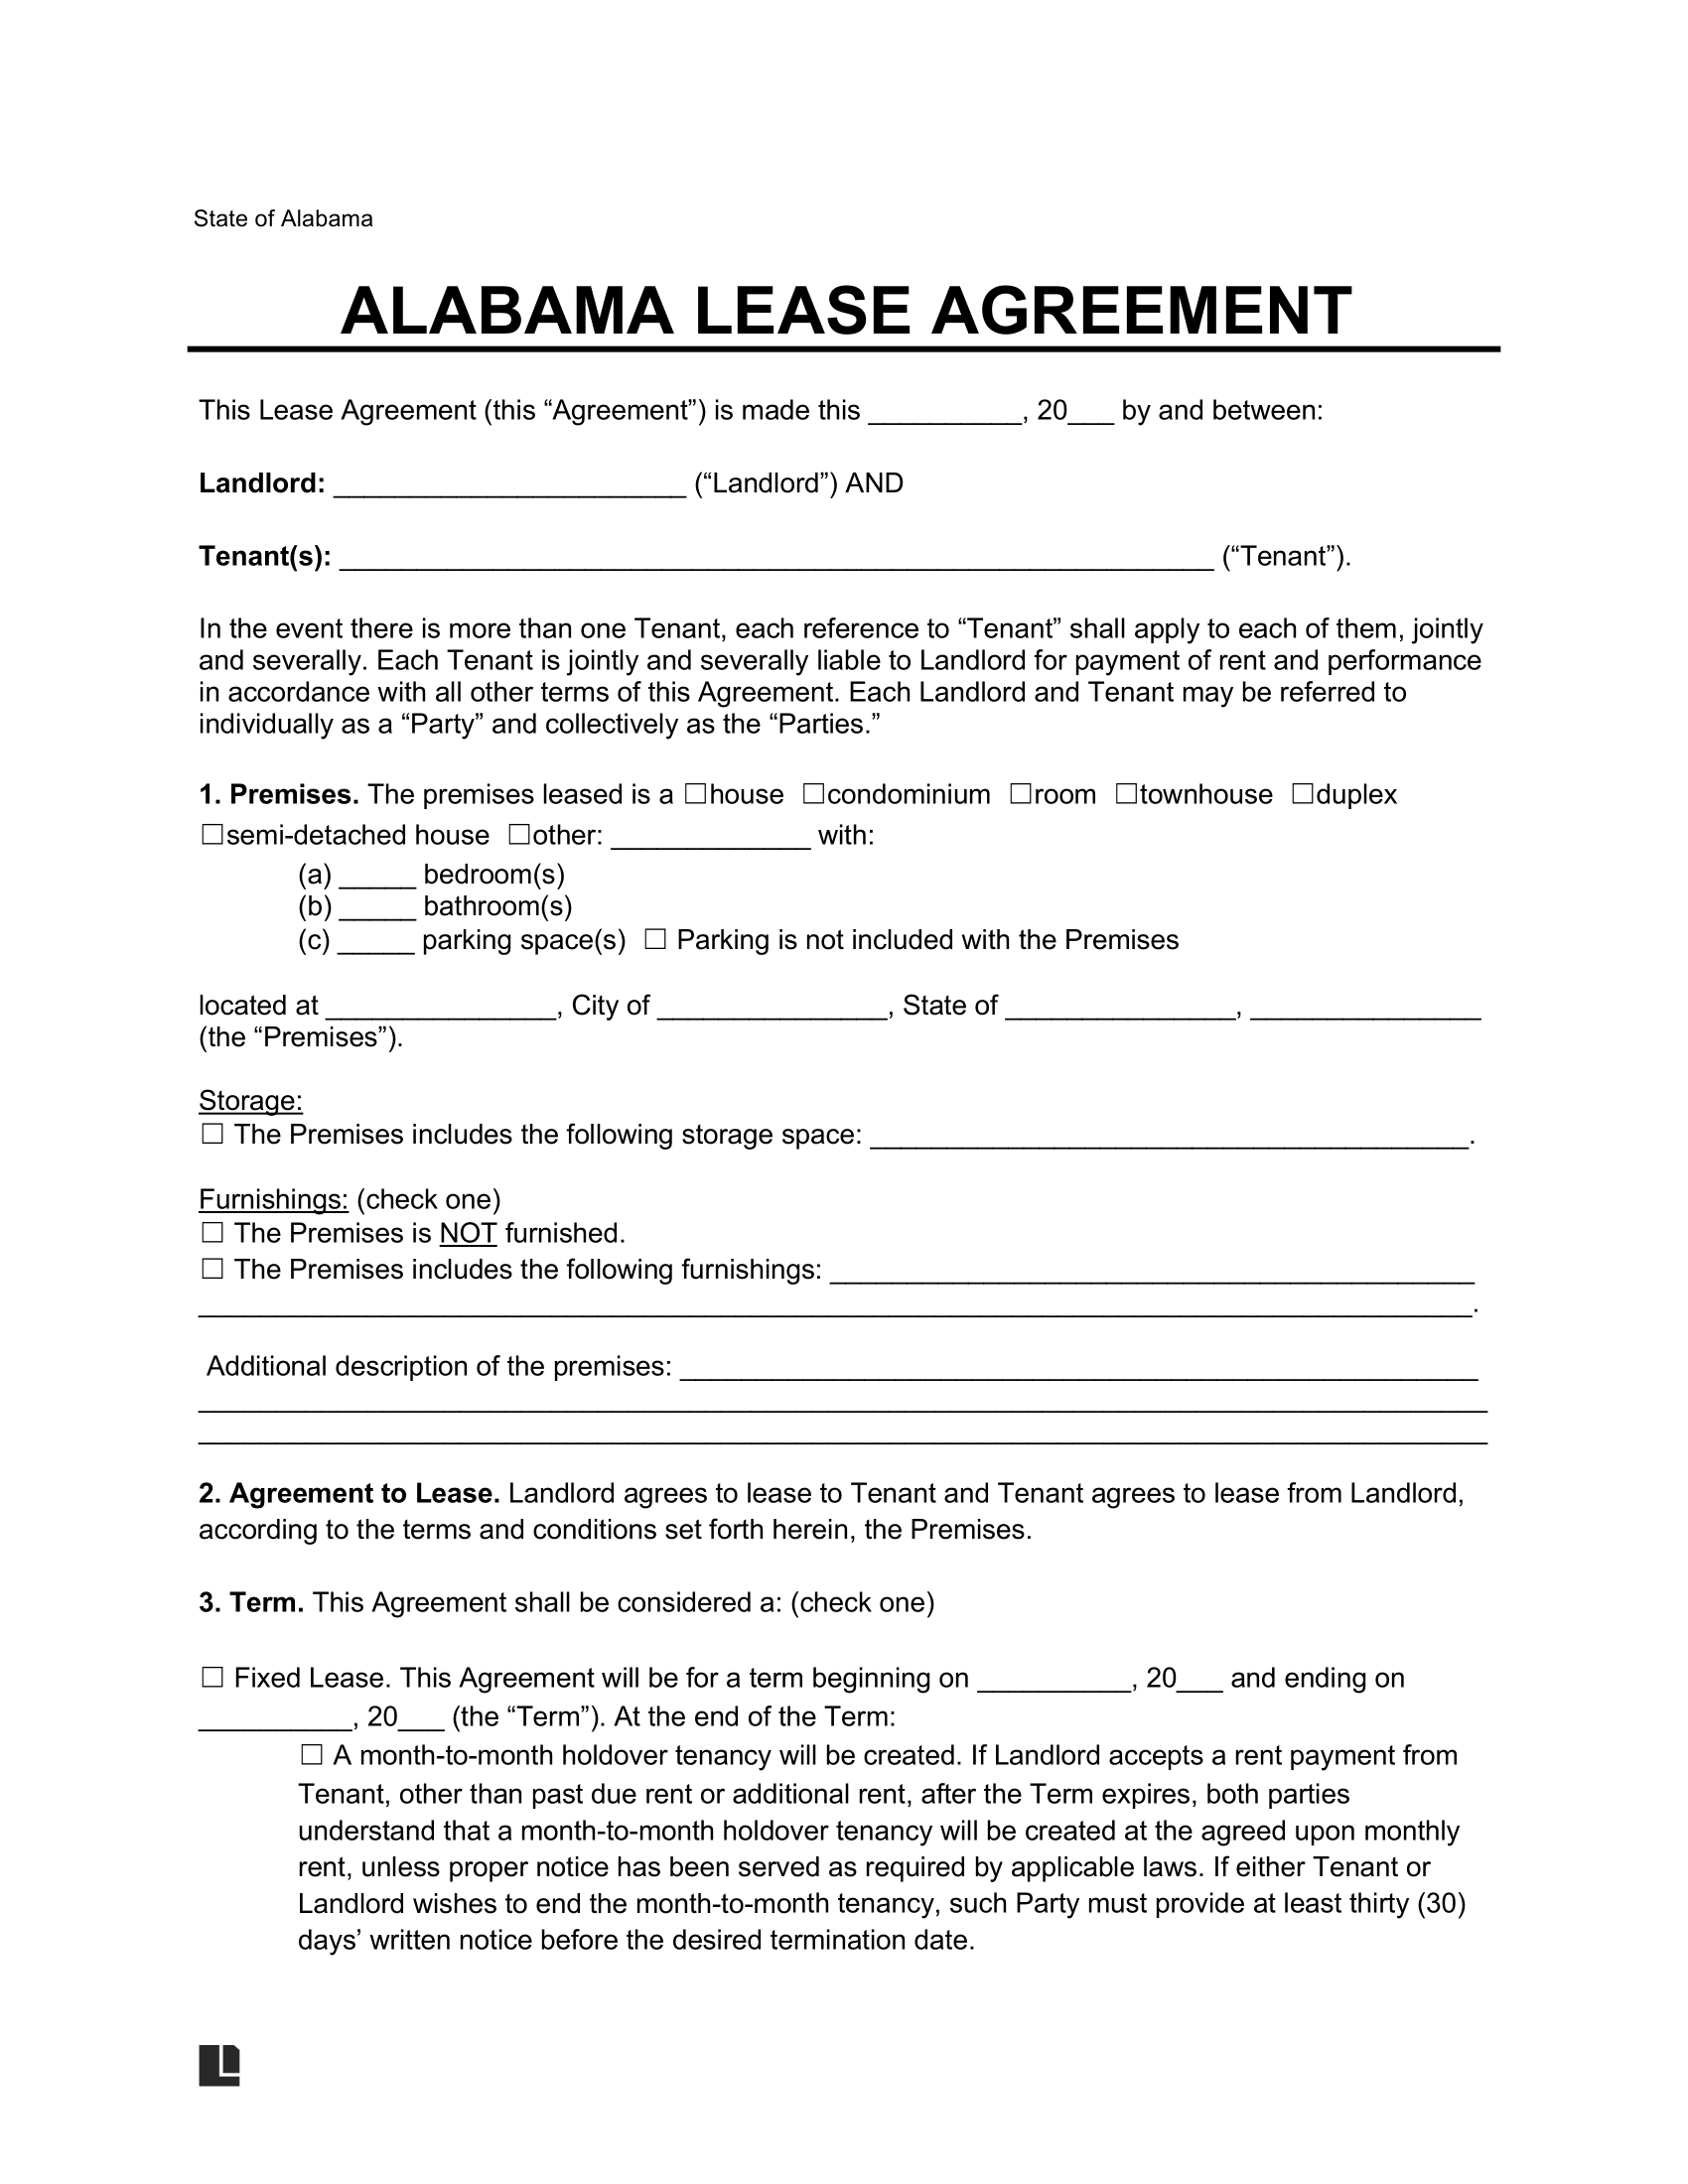 alabama lease agreement